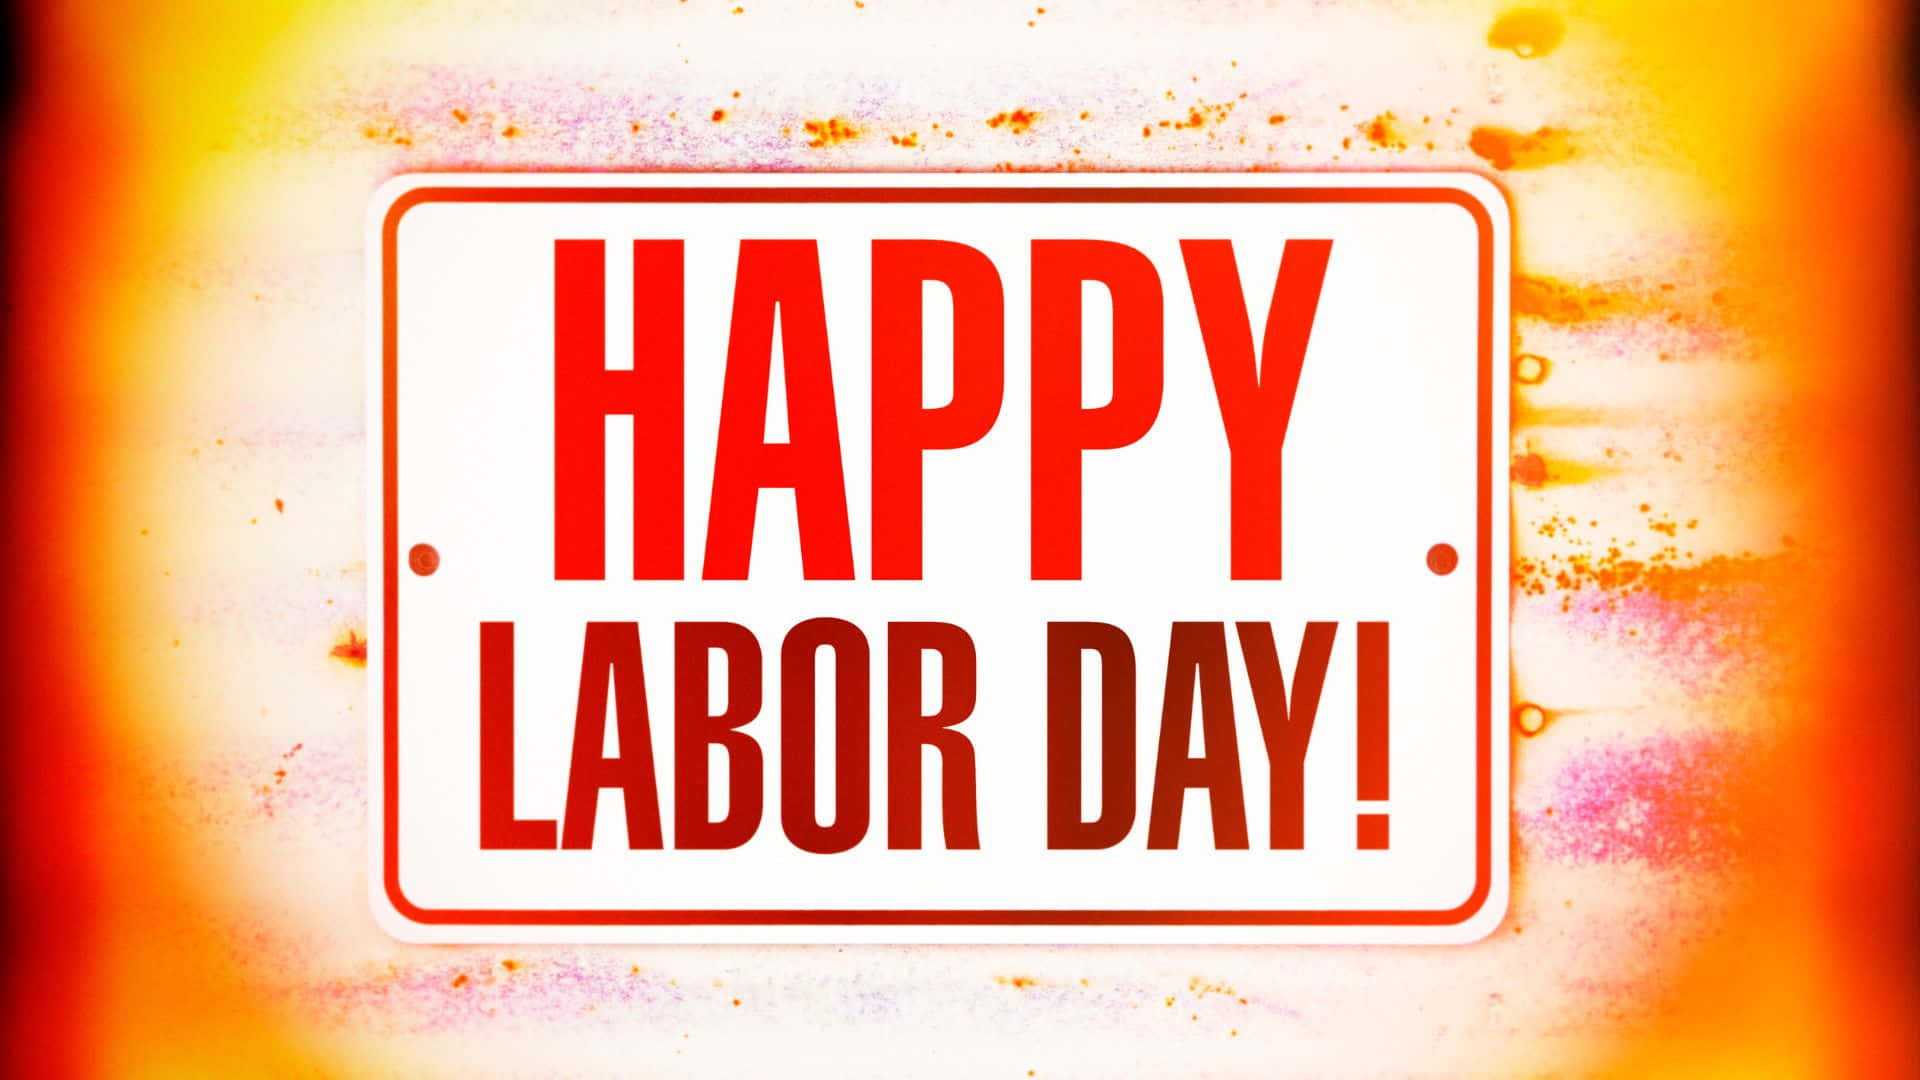 Celebrating Labor Day - Patriotic Background